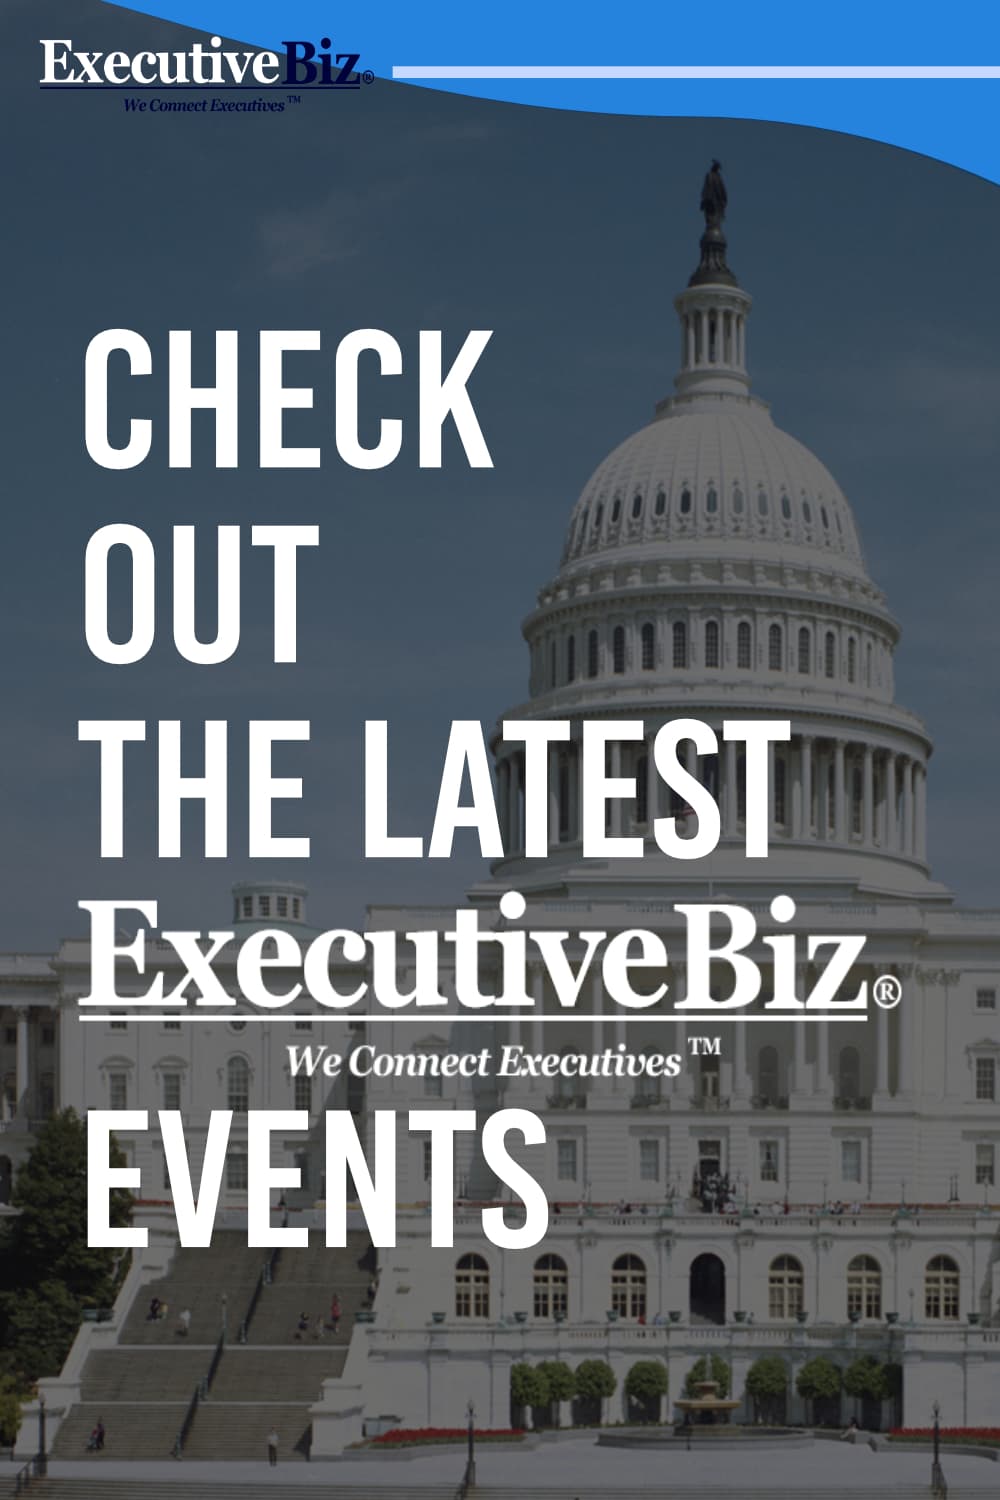 Executivebiz Events